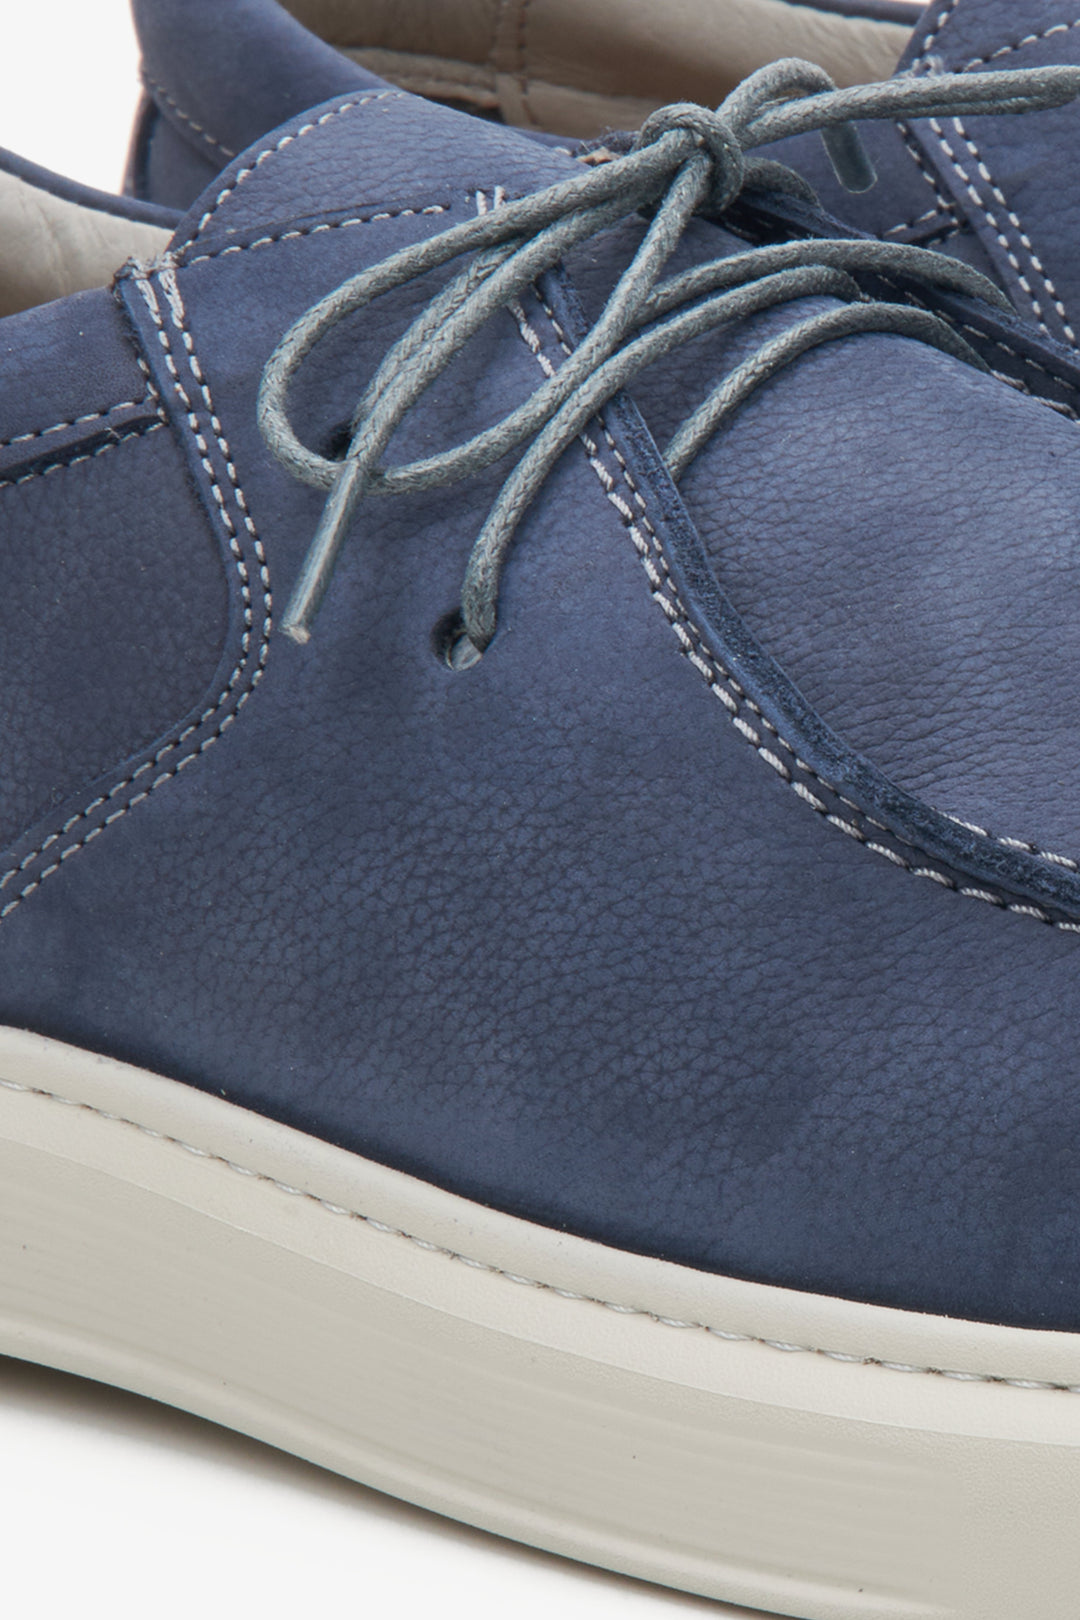 Estro blue  velour men's loafers - close-up on the details.